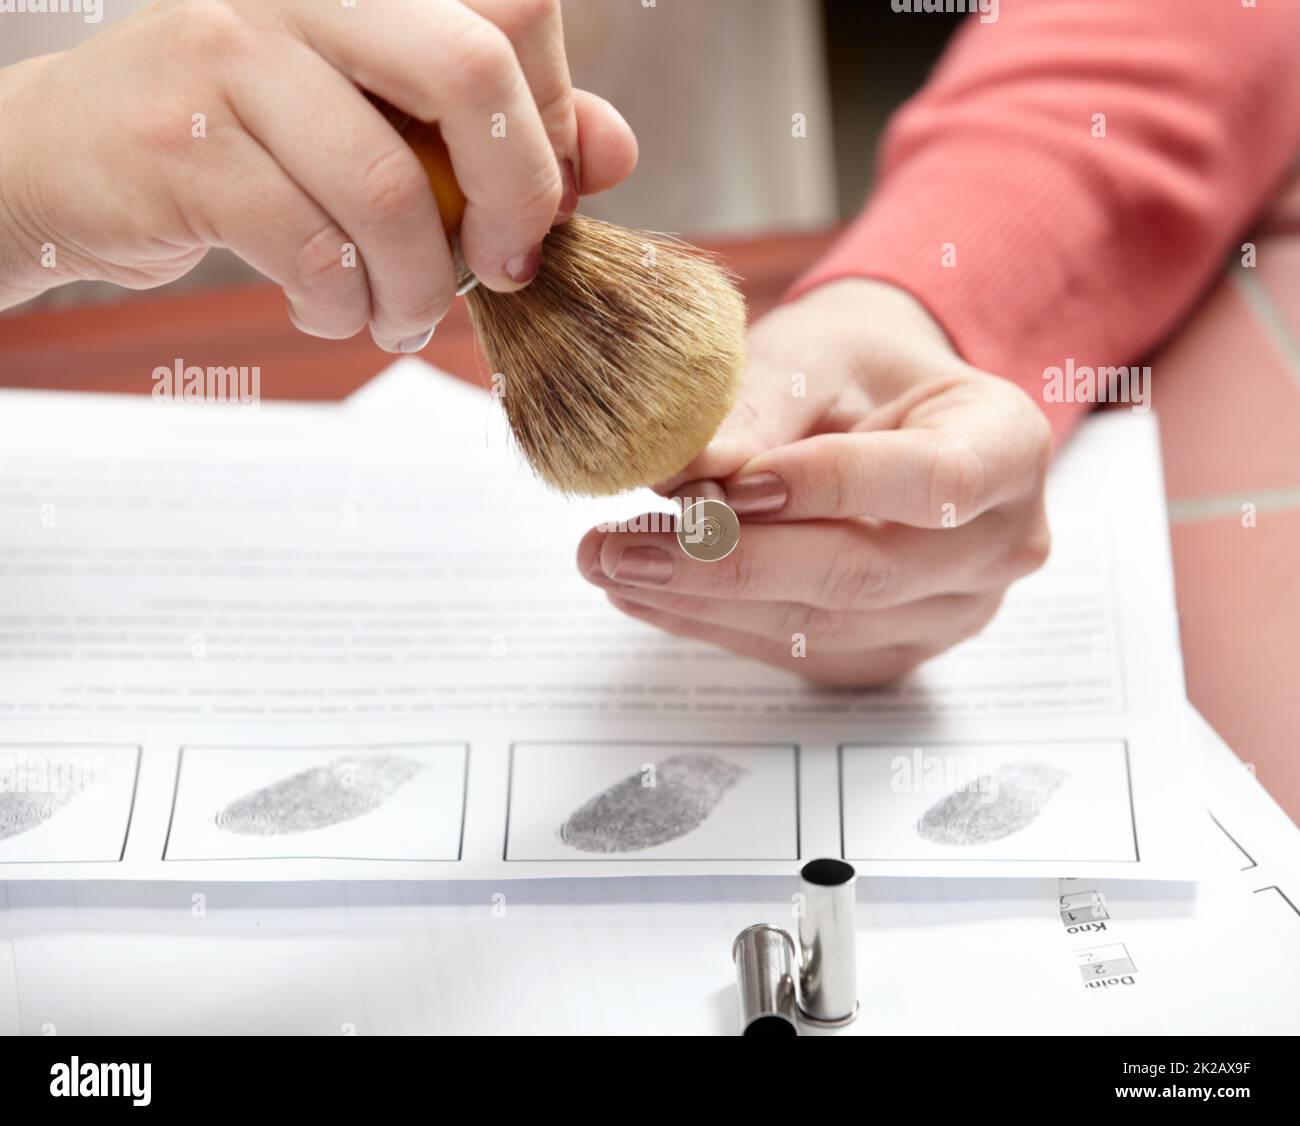 Detective Using Brush Powder Reveal Fingerprints Glass Surface Indoors  Closeup Stock Photo by ©NewAfrica 418595334